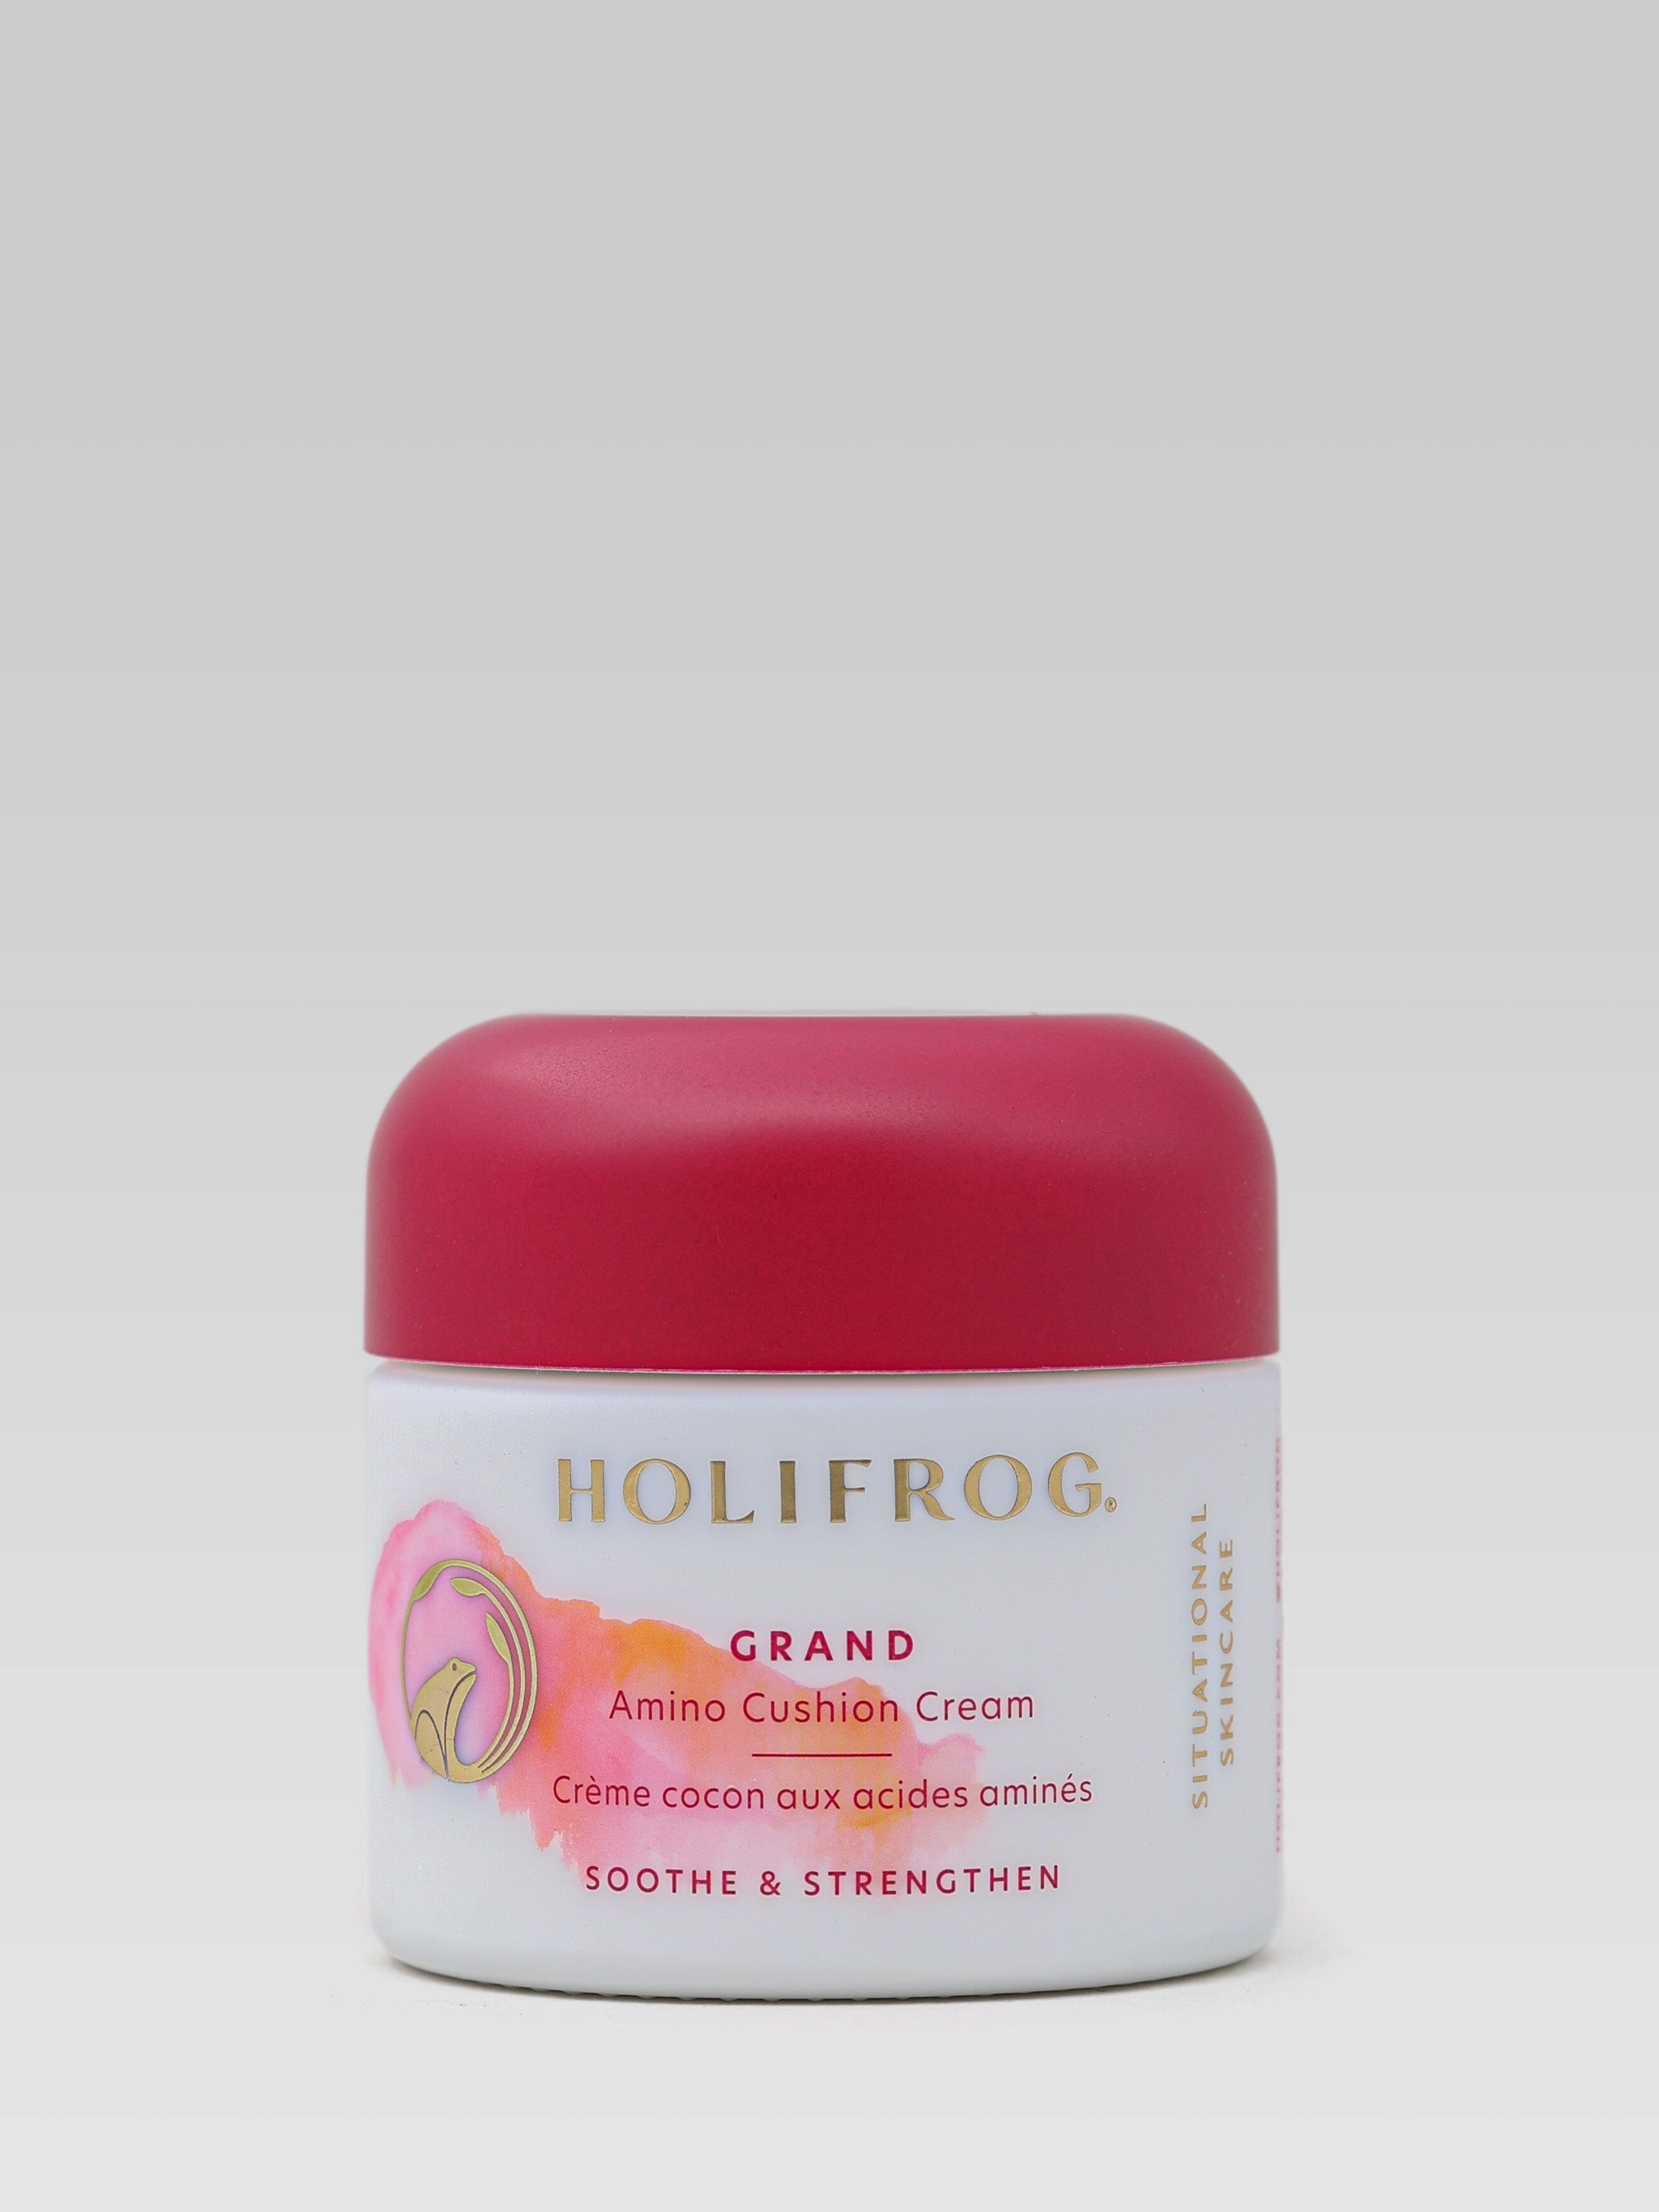 HOLIFROG Grand Amino Cushion Cream product shot